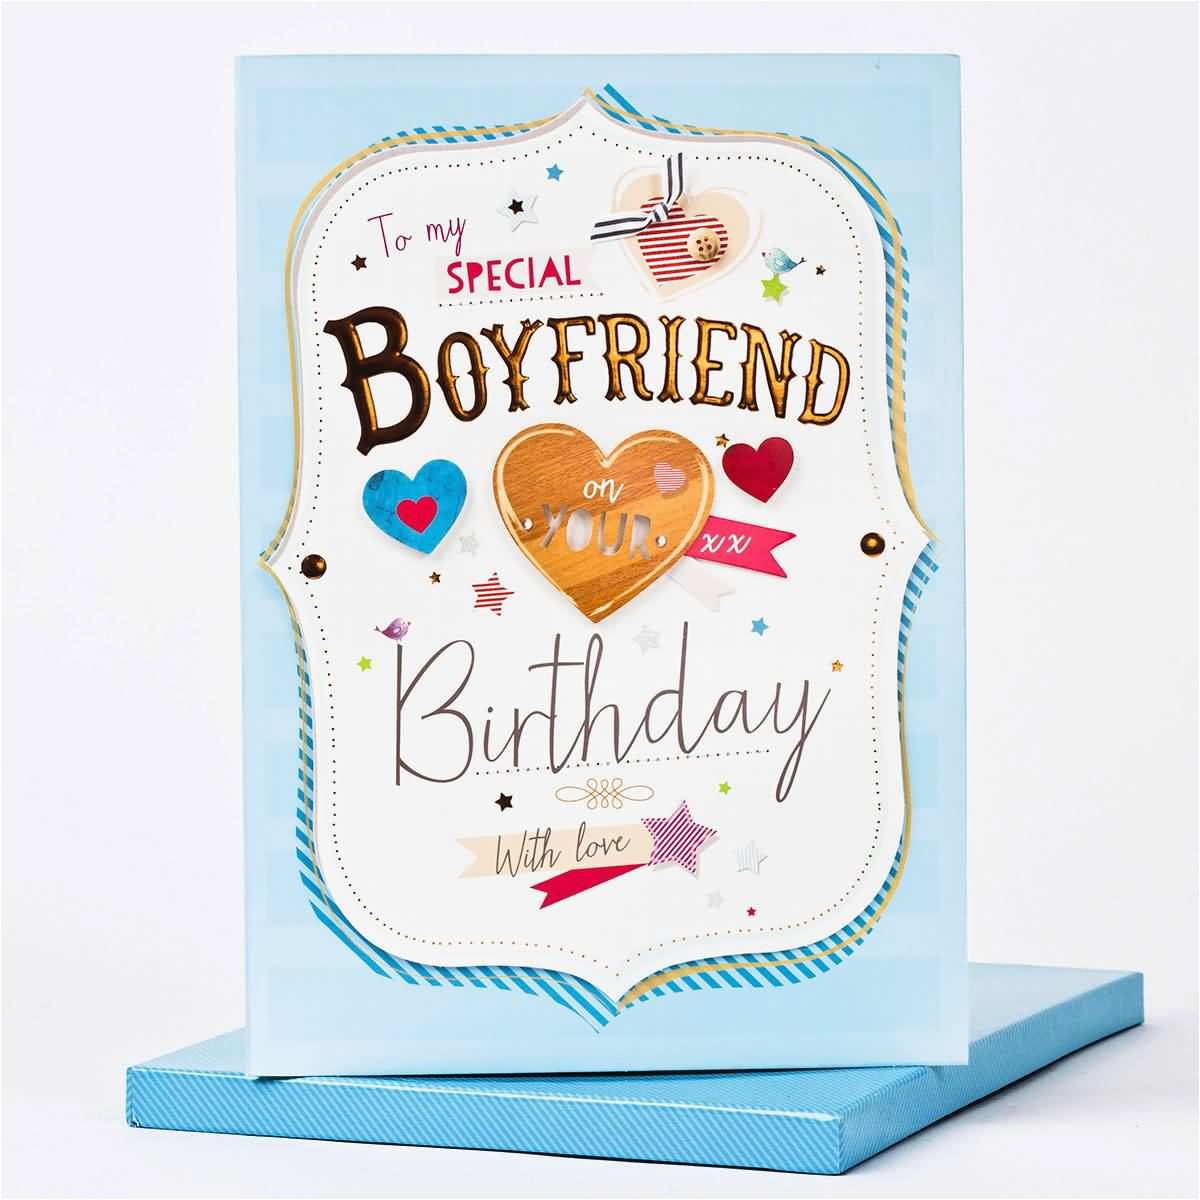 21 beautiful boyfriend birthday greeting wishes photos